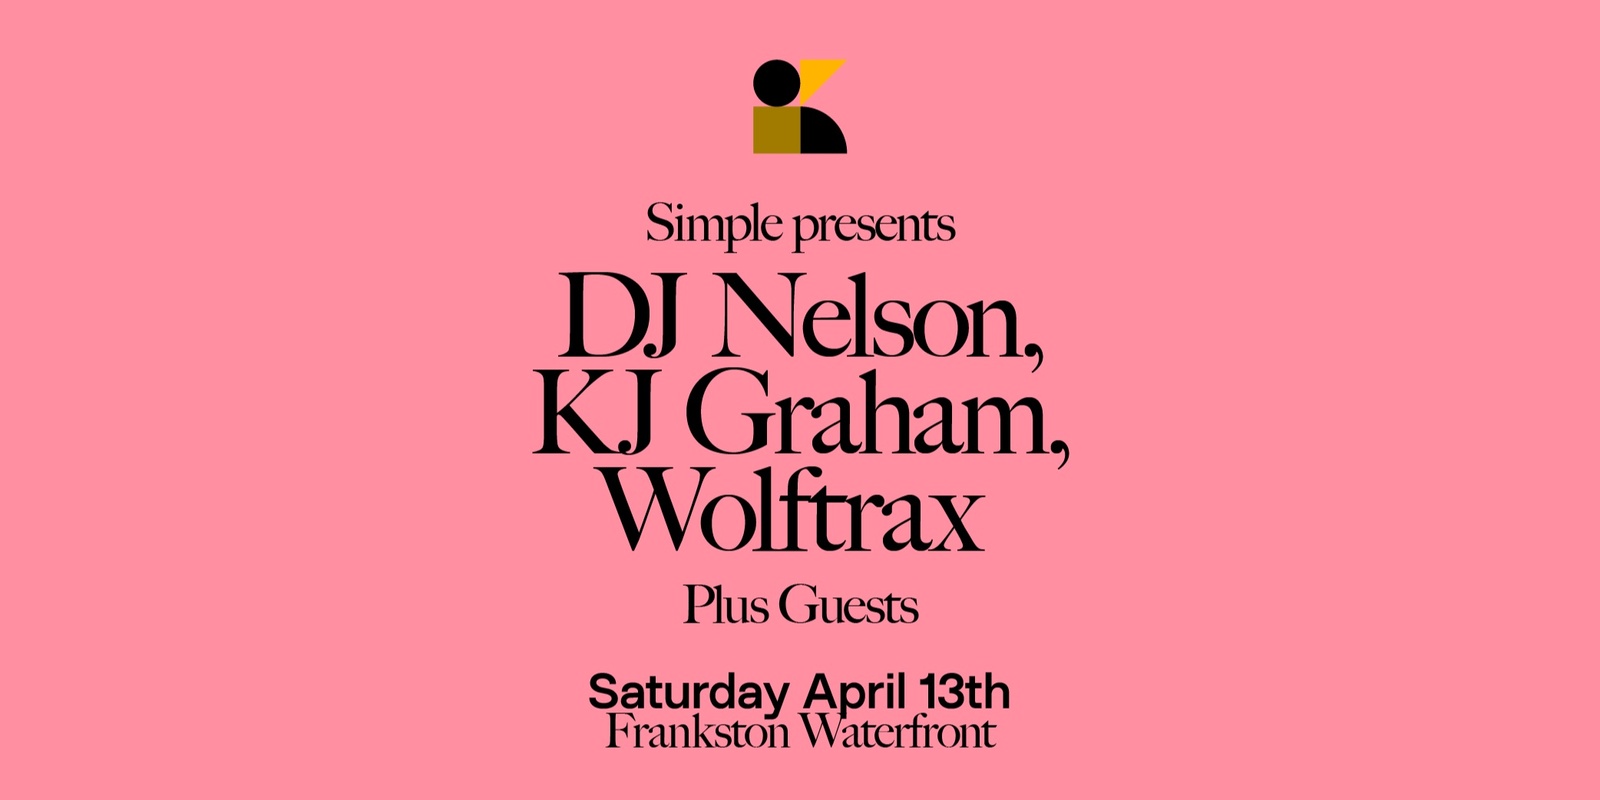 Banner image for Kubik Frankston: Simple presents Dj Nelson, Wolftrax, KJ Graham + +